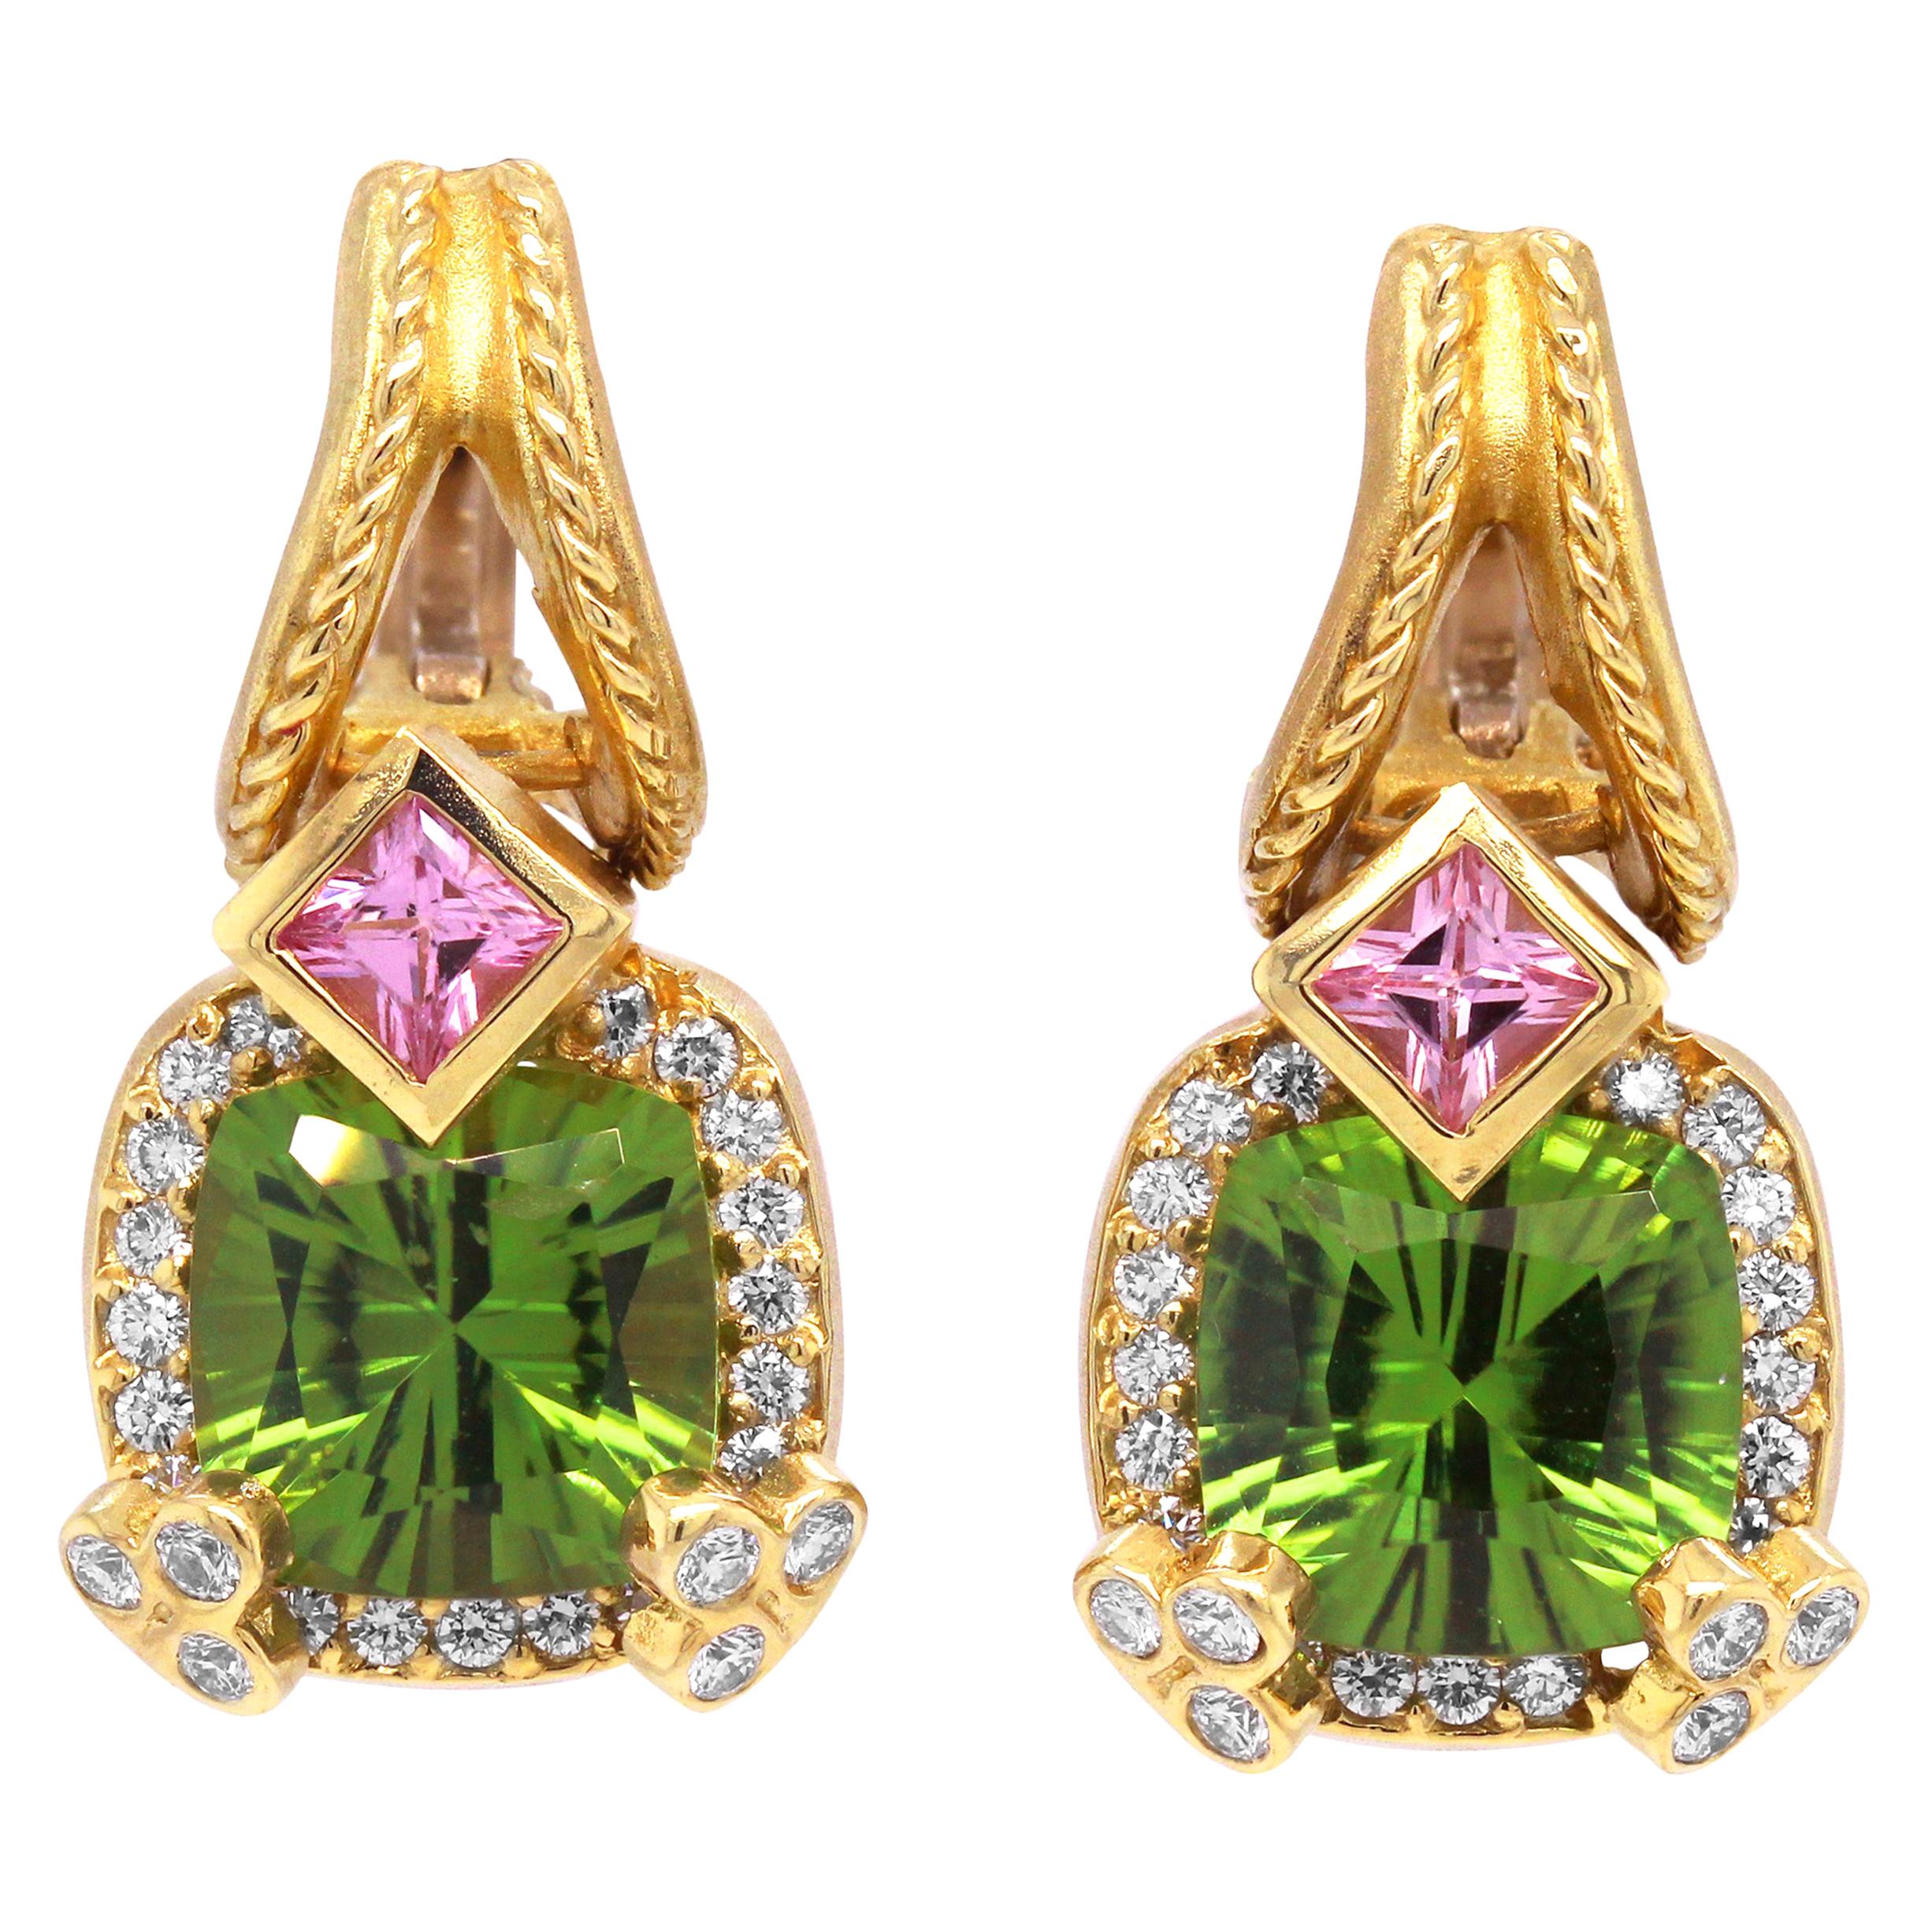 Stambolian Cushion Cut Peridot Princess Cut Pink Sapphire Diamond Gold Earrings